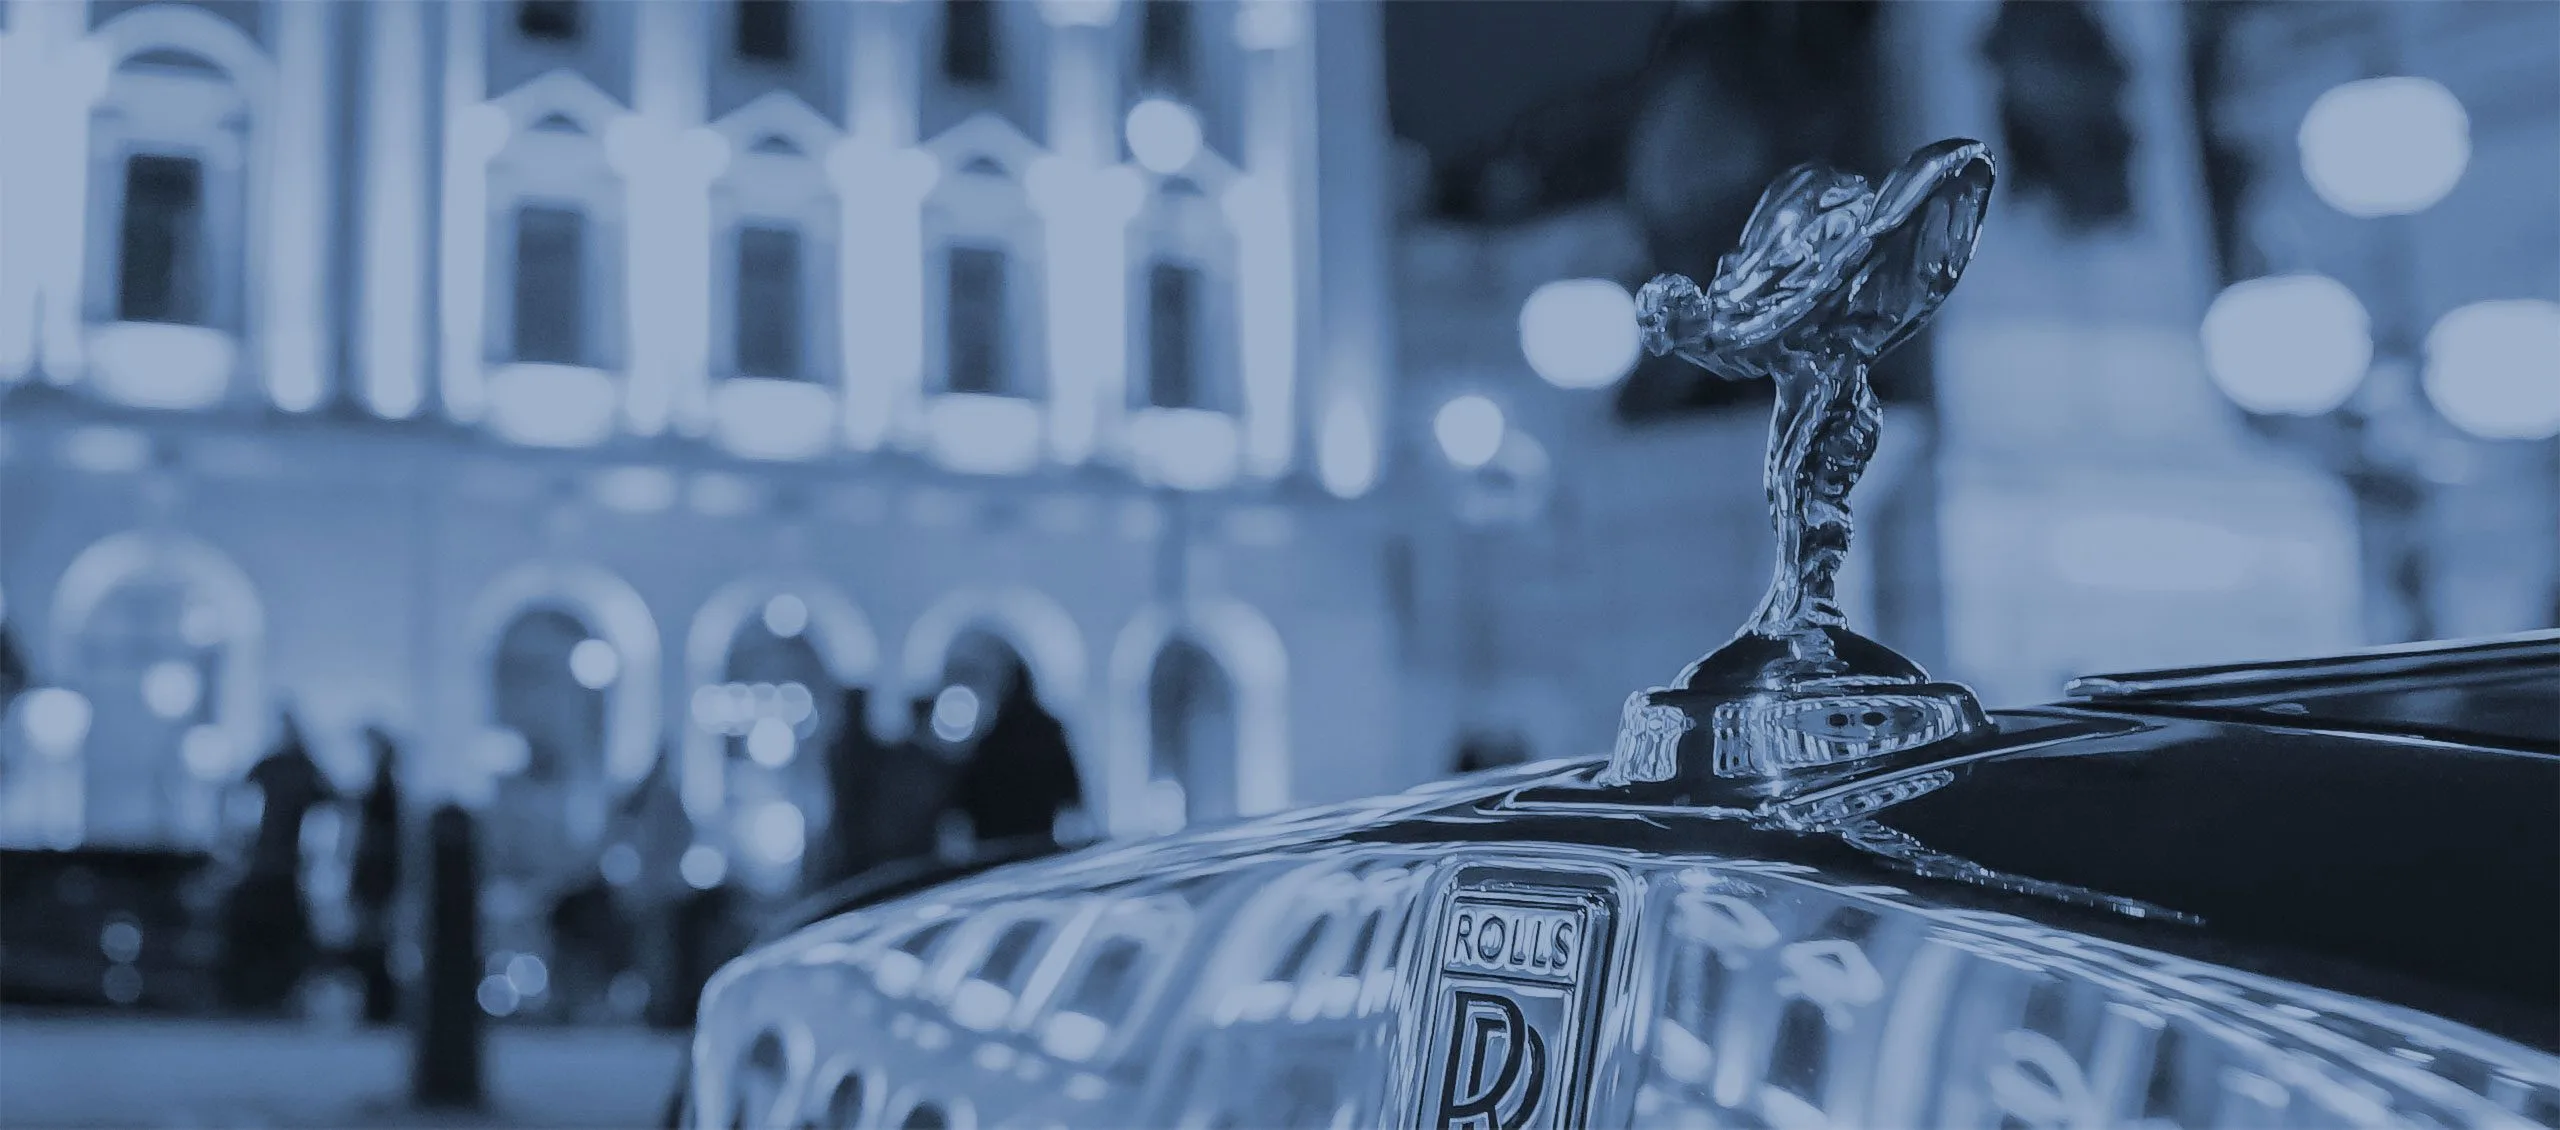 Rolls Royce Phantom Chauffeur Services London